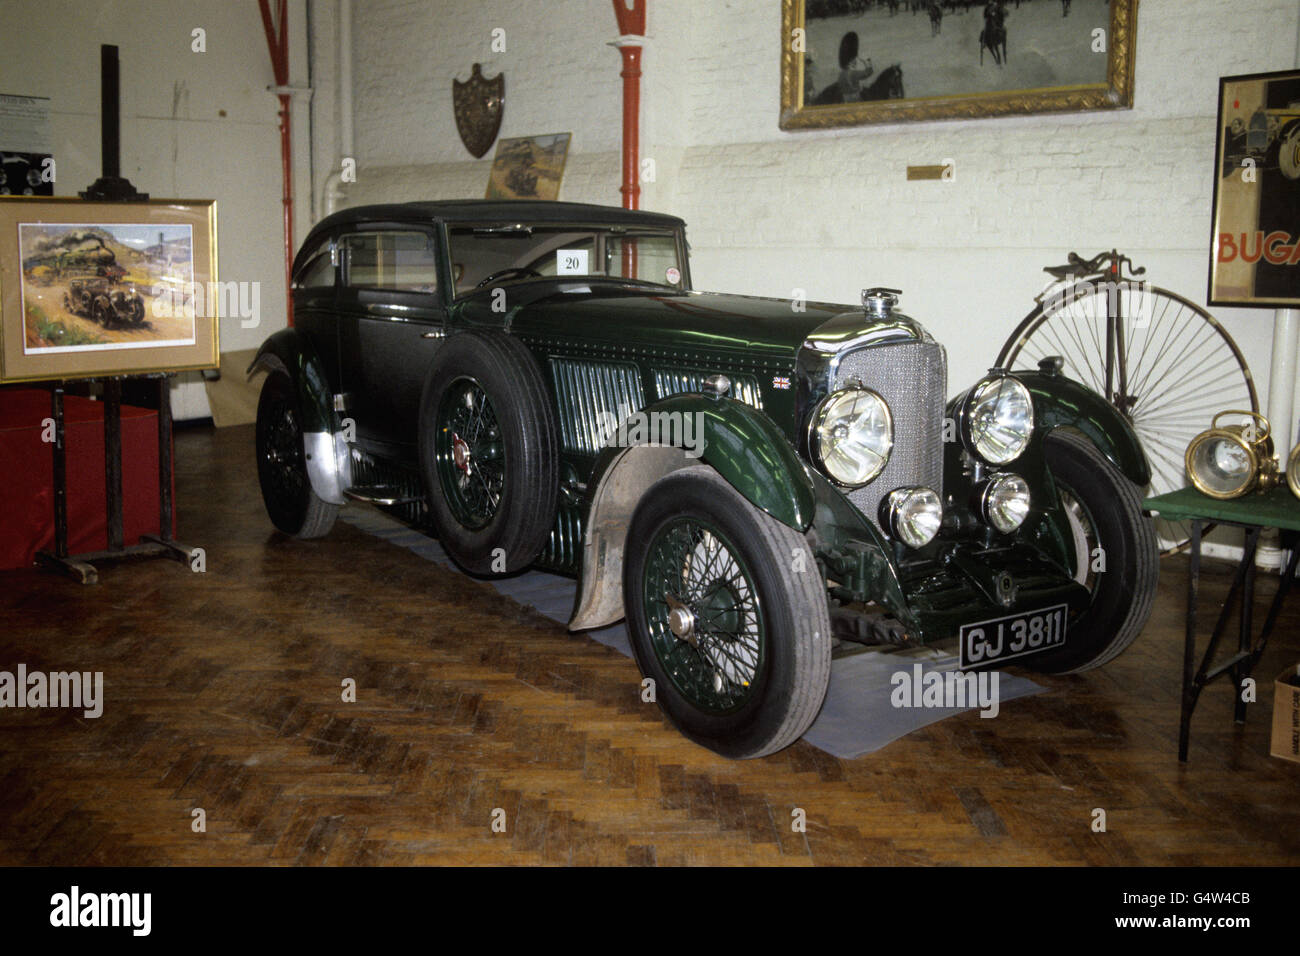 Motoring - Sotheby's Vintage Car Auction - London. 246,000 at Sotheby's Vintage Car Auction Stock Photo